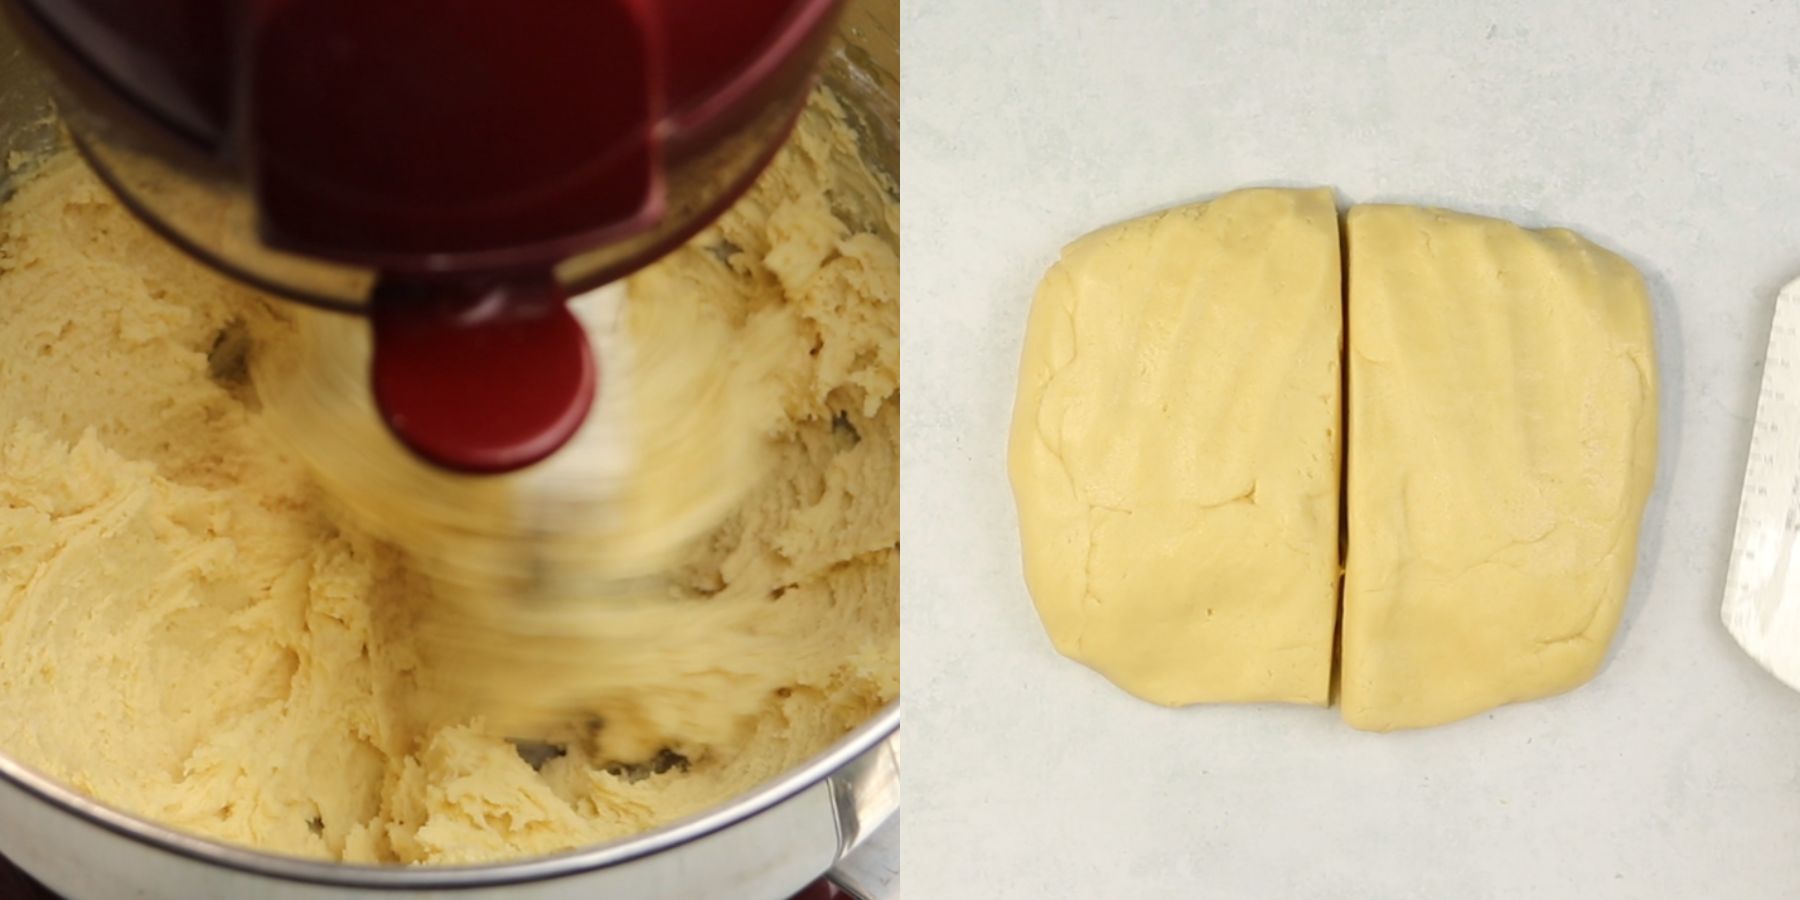 Cookies process shots.